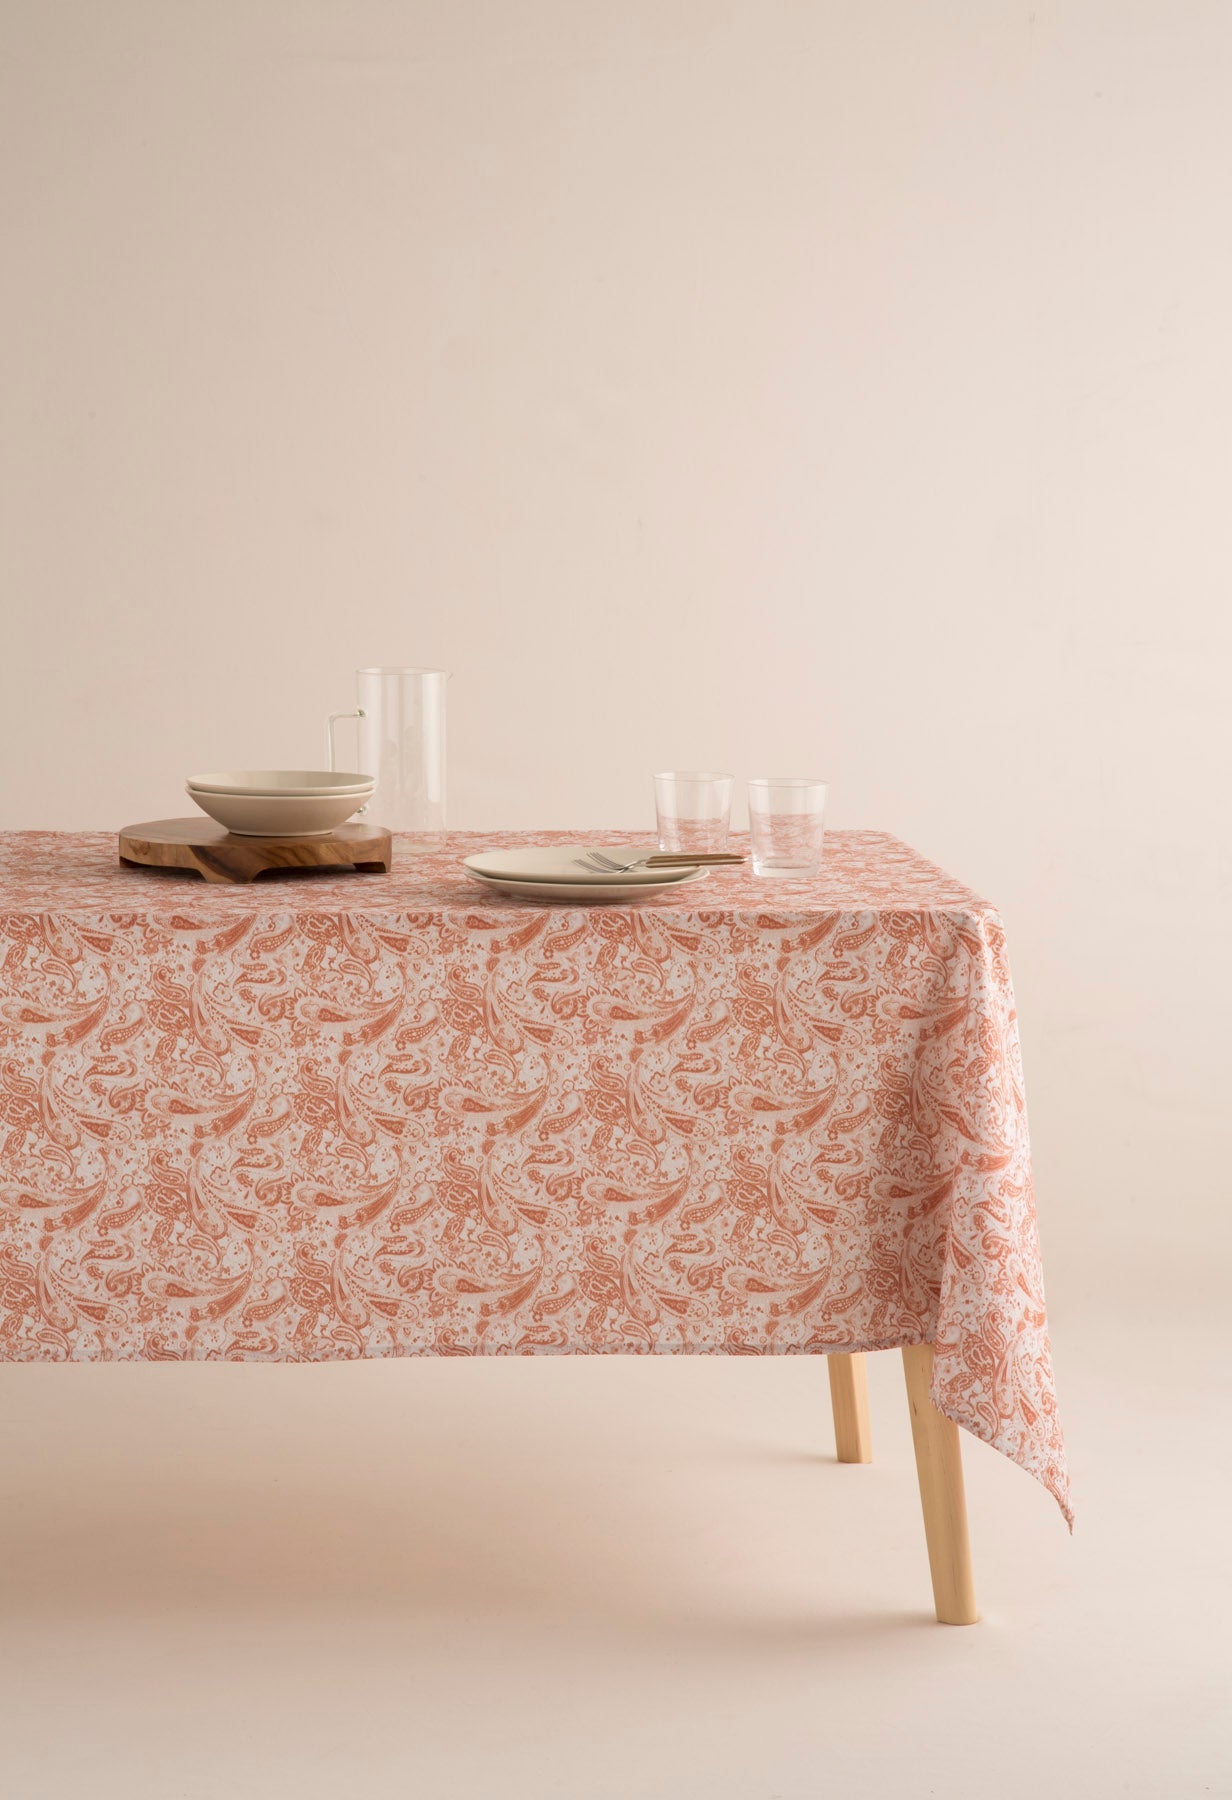 Caldera Stain-Resistant Cashmere Tablecloth 140x250 - Hana Lole